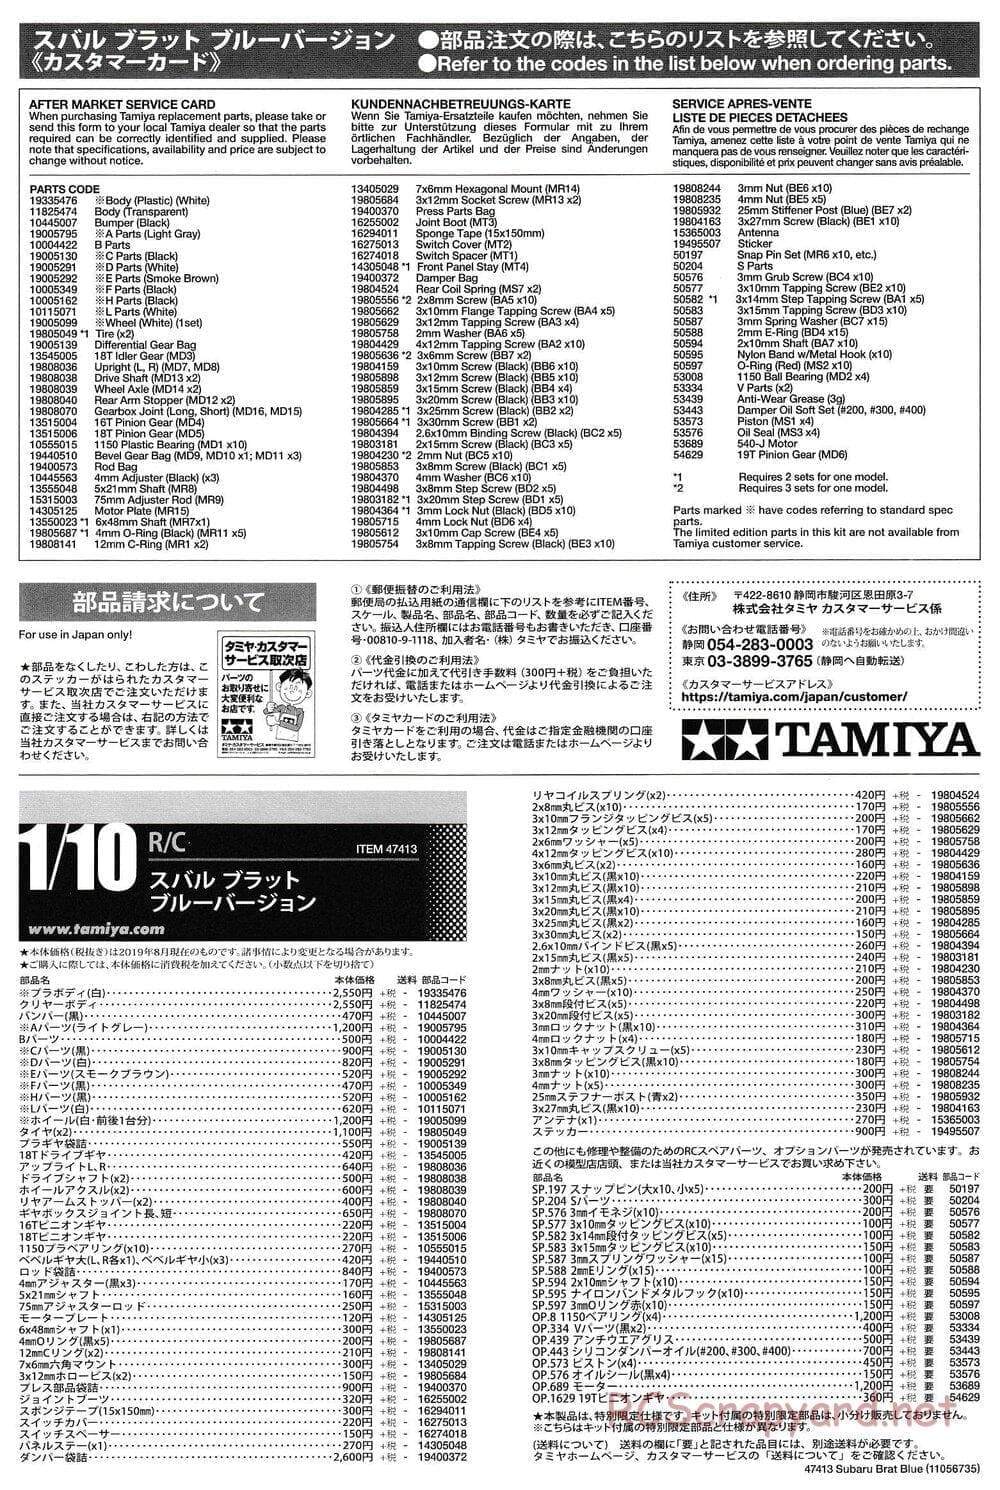 Tamiya - Subaru Brat Blue - ORV Chassis - Manual - Page 2